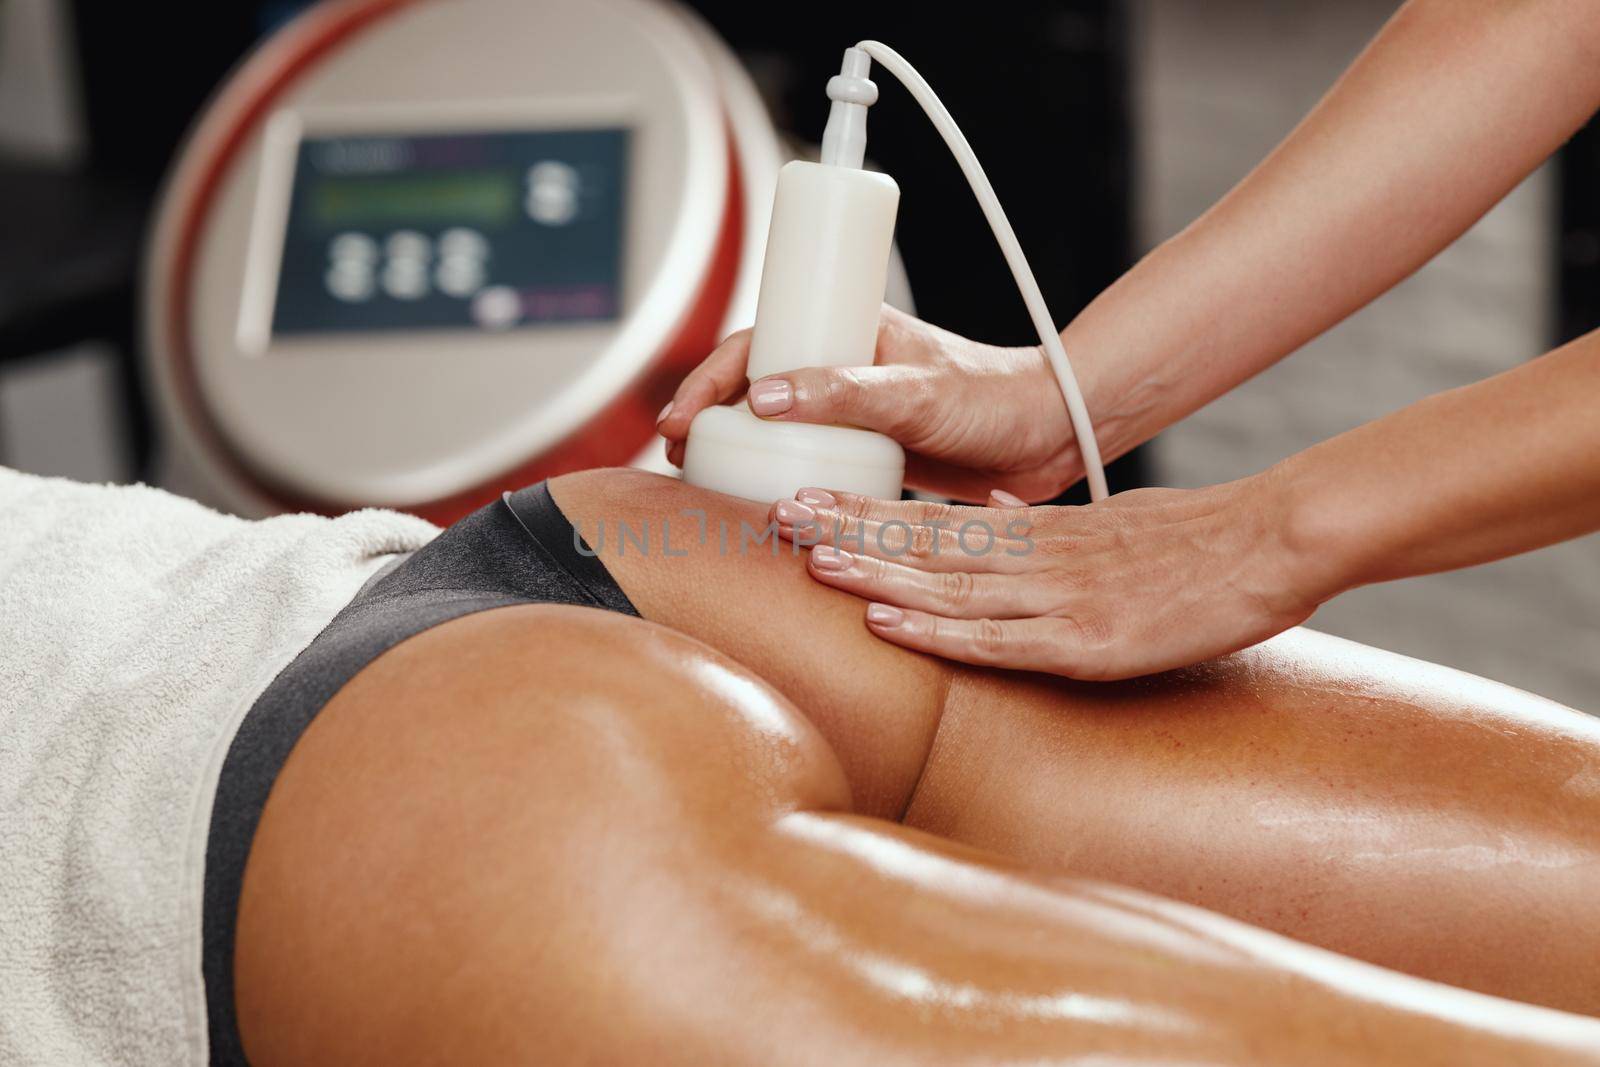 Ultrasound Cavitation Body Contouring Treatment by MilanMarkovic78